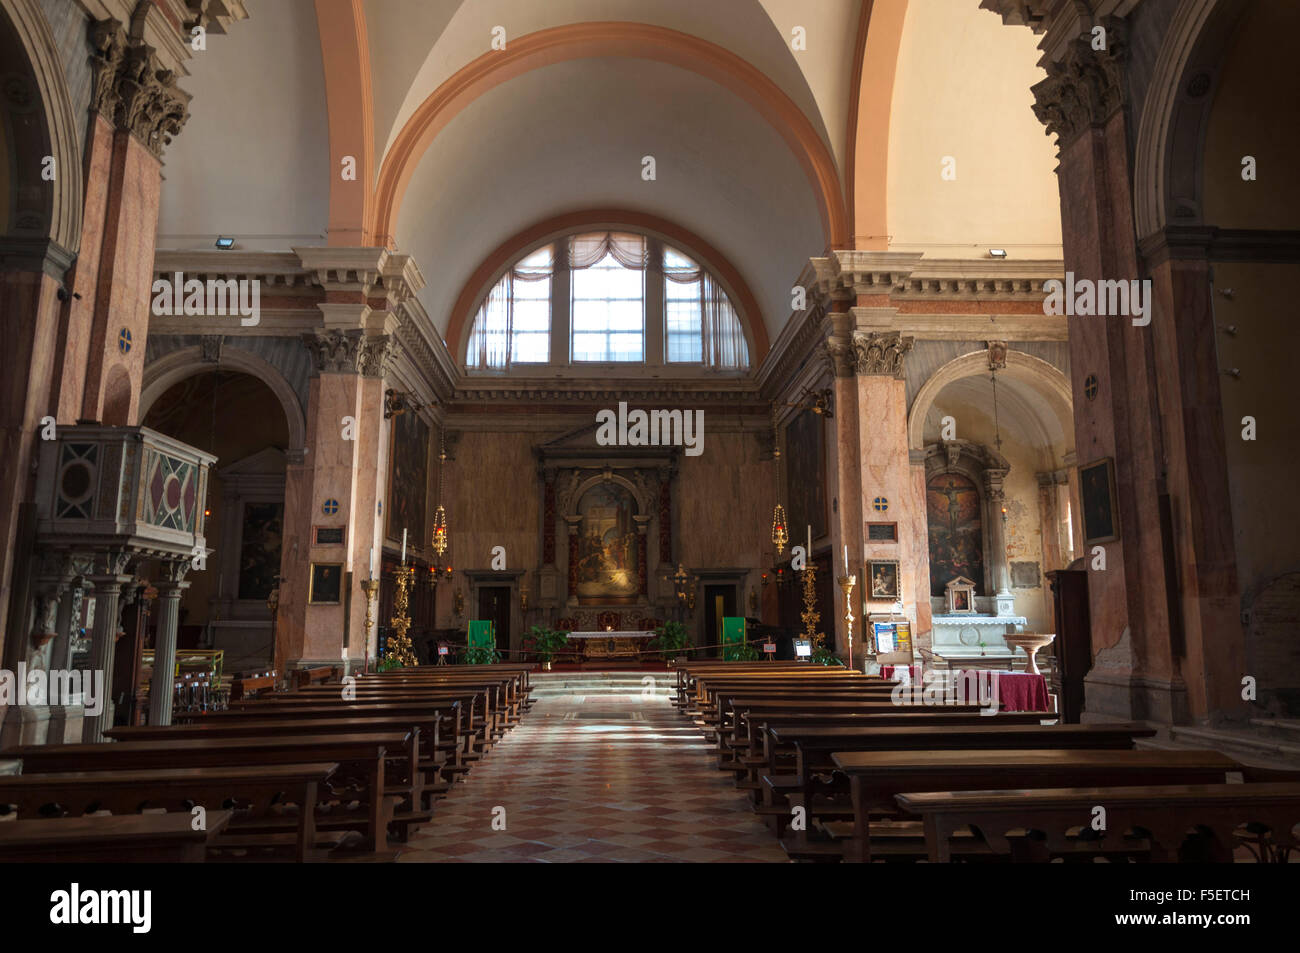 Chiesa dei Santi Gervasio e Protasio, Venedig, Italien. Vulgo San Trovaso. Inneren Altar Kunst Kirchenbänke Stockfoto